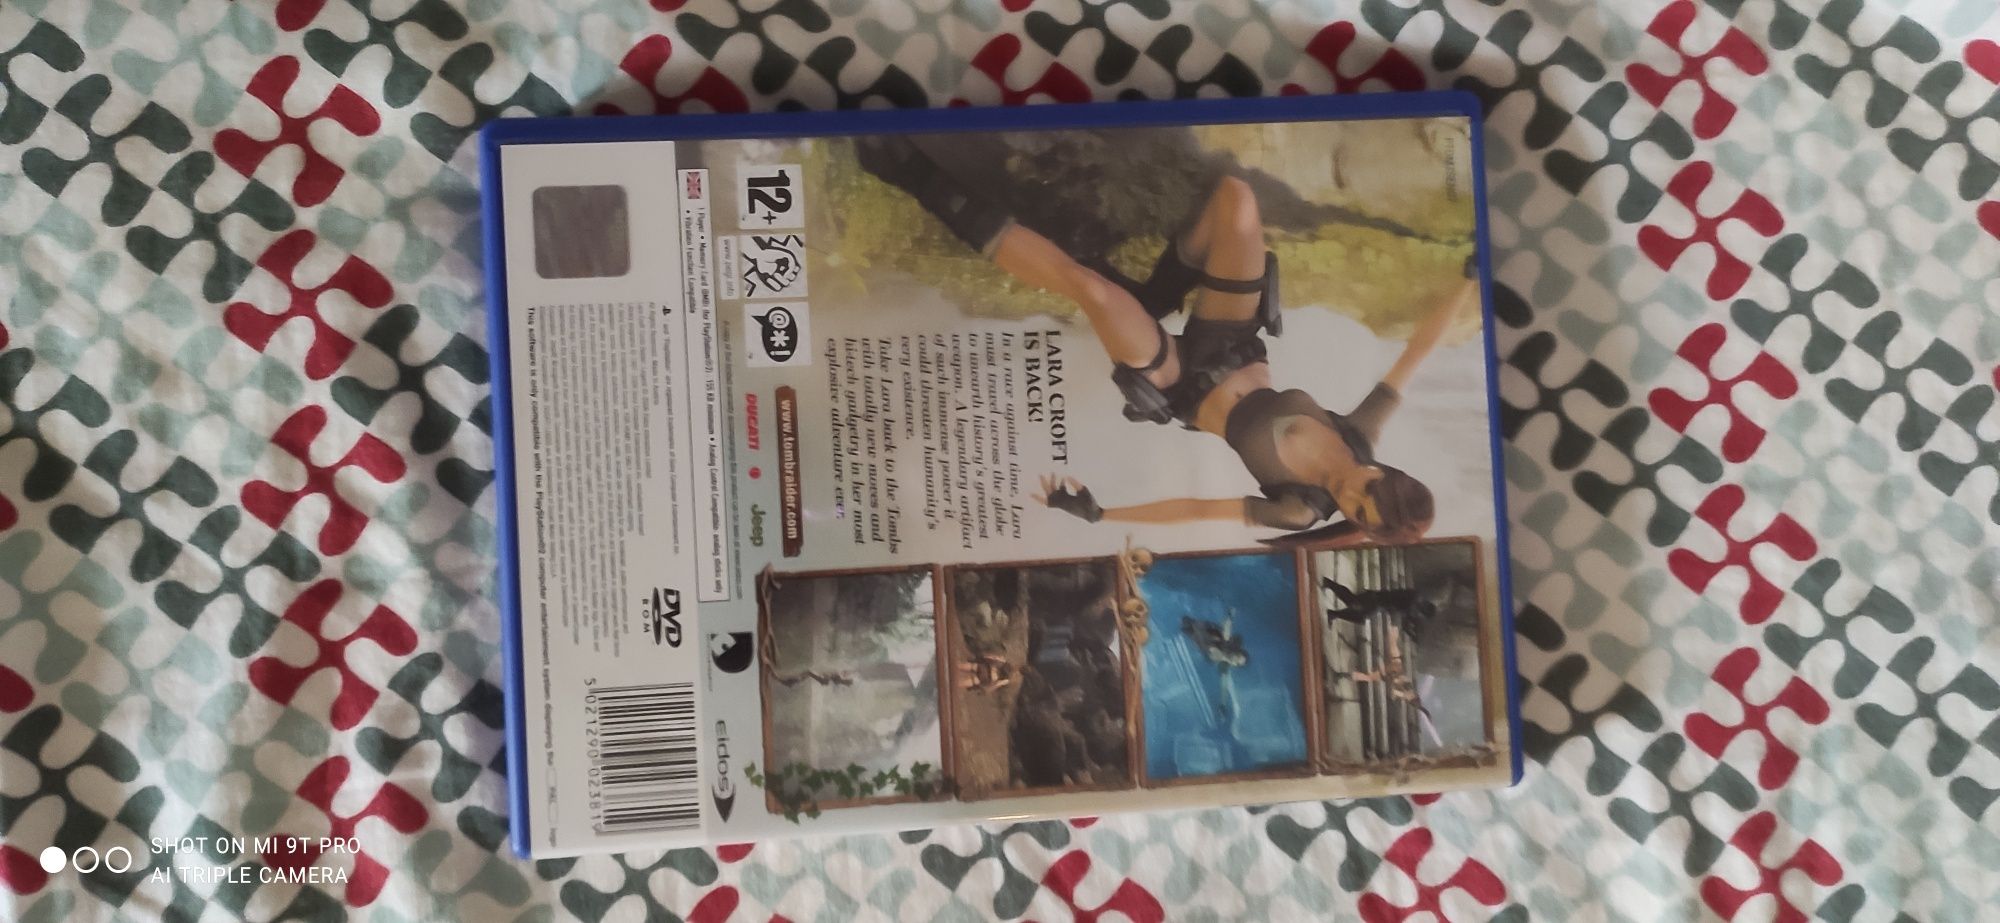 Tomb Raider Legend PS2 + Guide Book